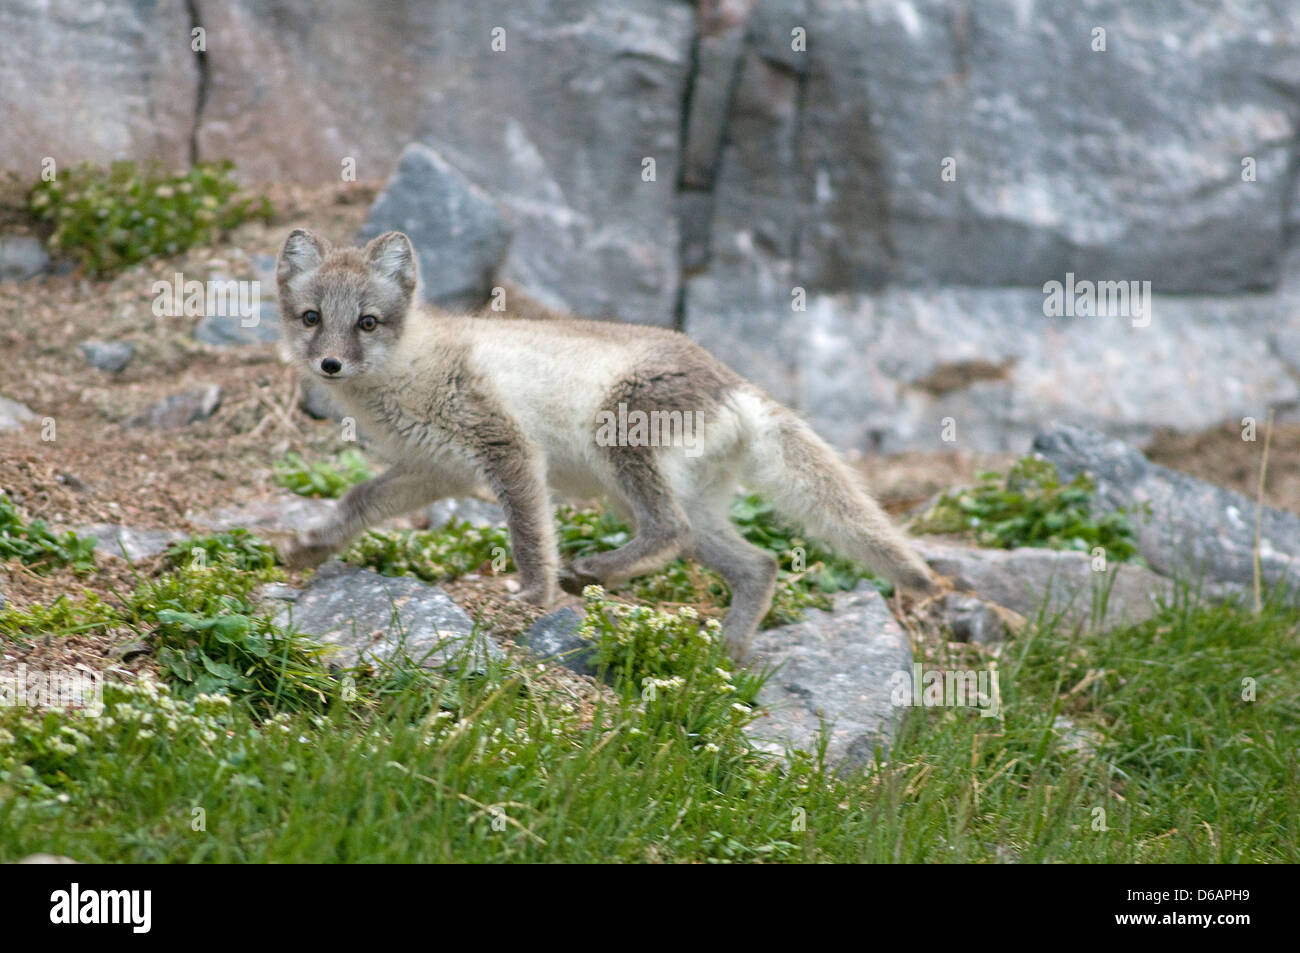 Norway, Svalbard Archipelago, Spitsbergen, Sassenfjorden. Arctic fox, Alopex lagopus, adults walks the base of cliffs where guil Stock Photo